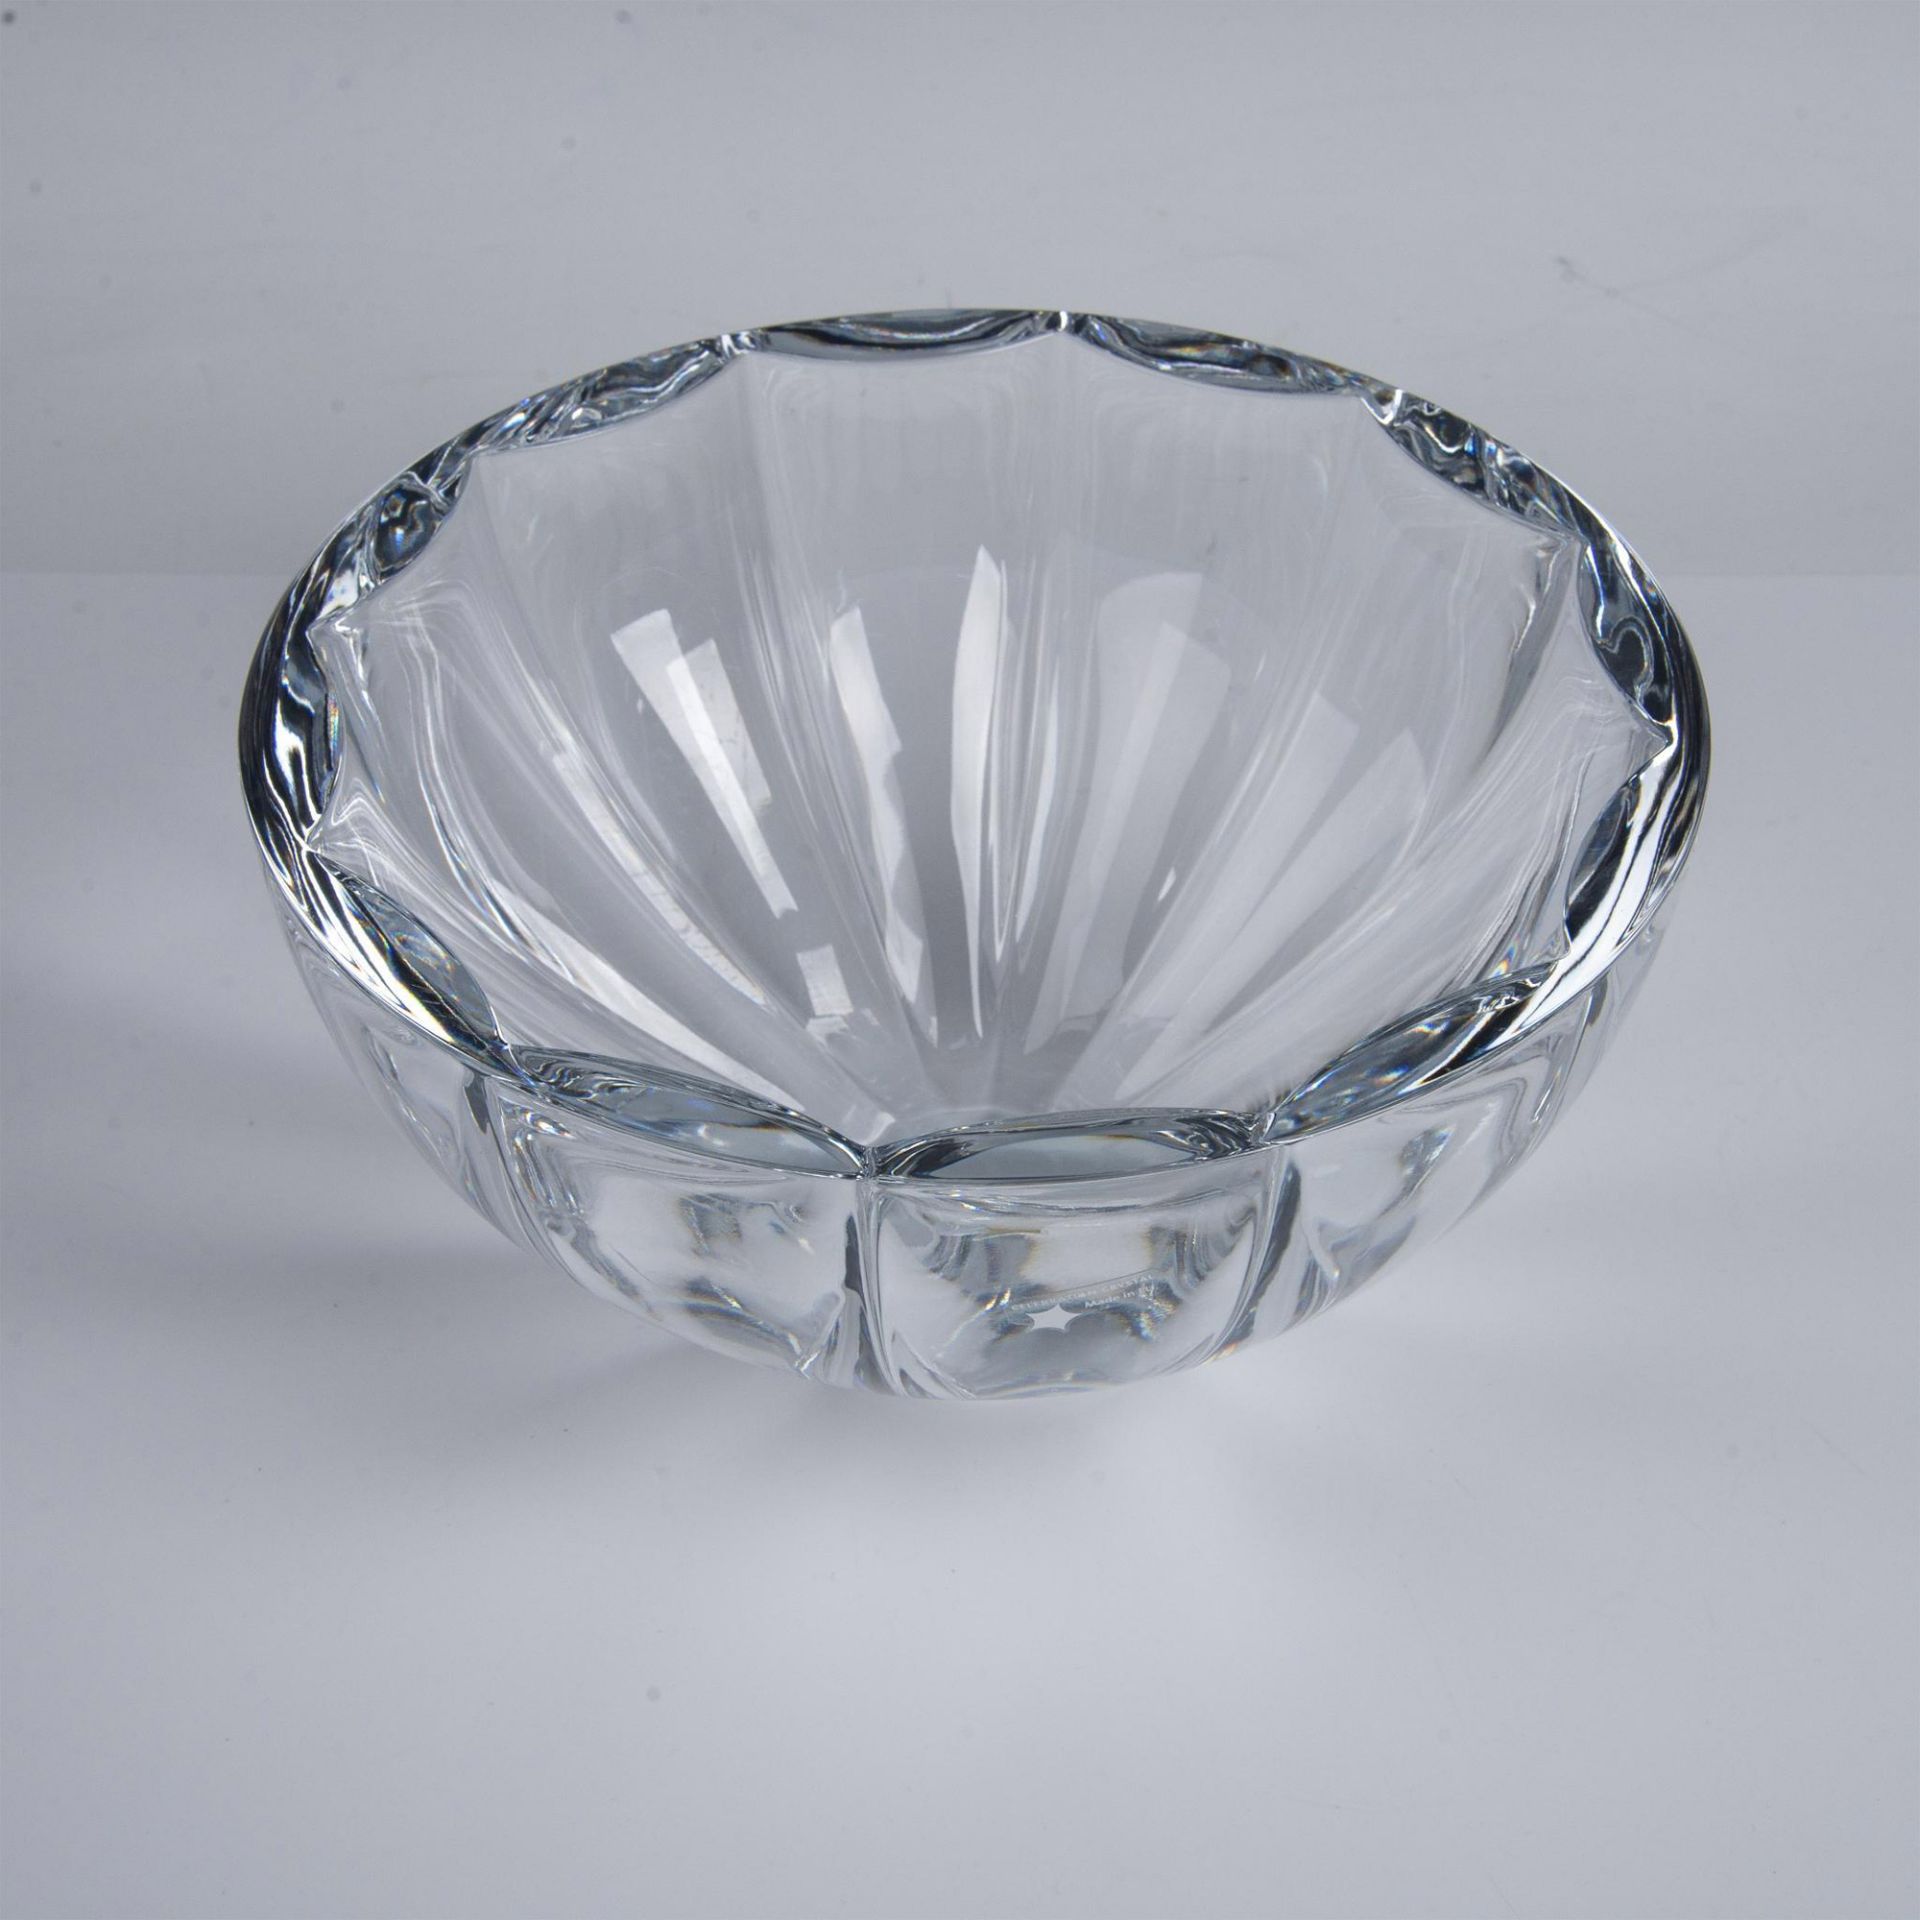 Celebration Crystal Centerpiece Bowl - Image 3 of 4